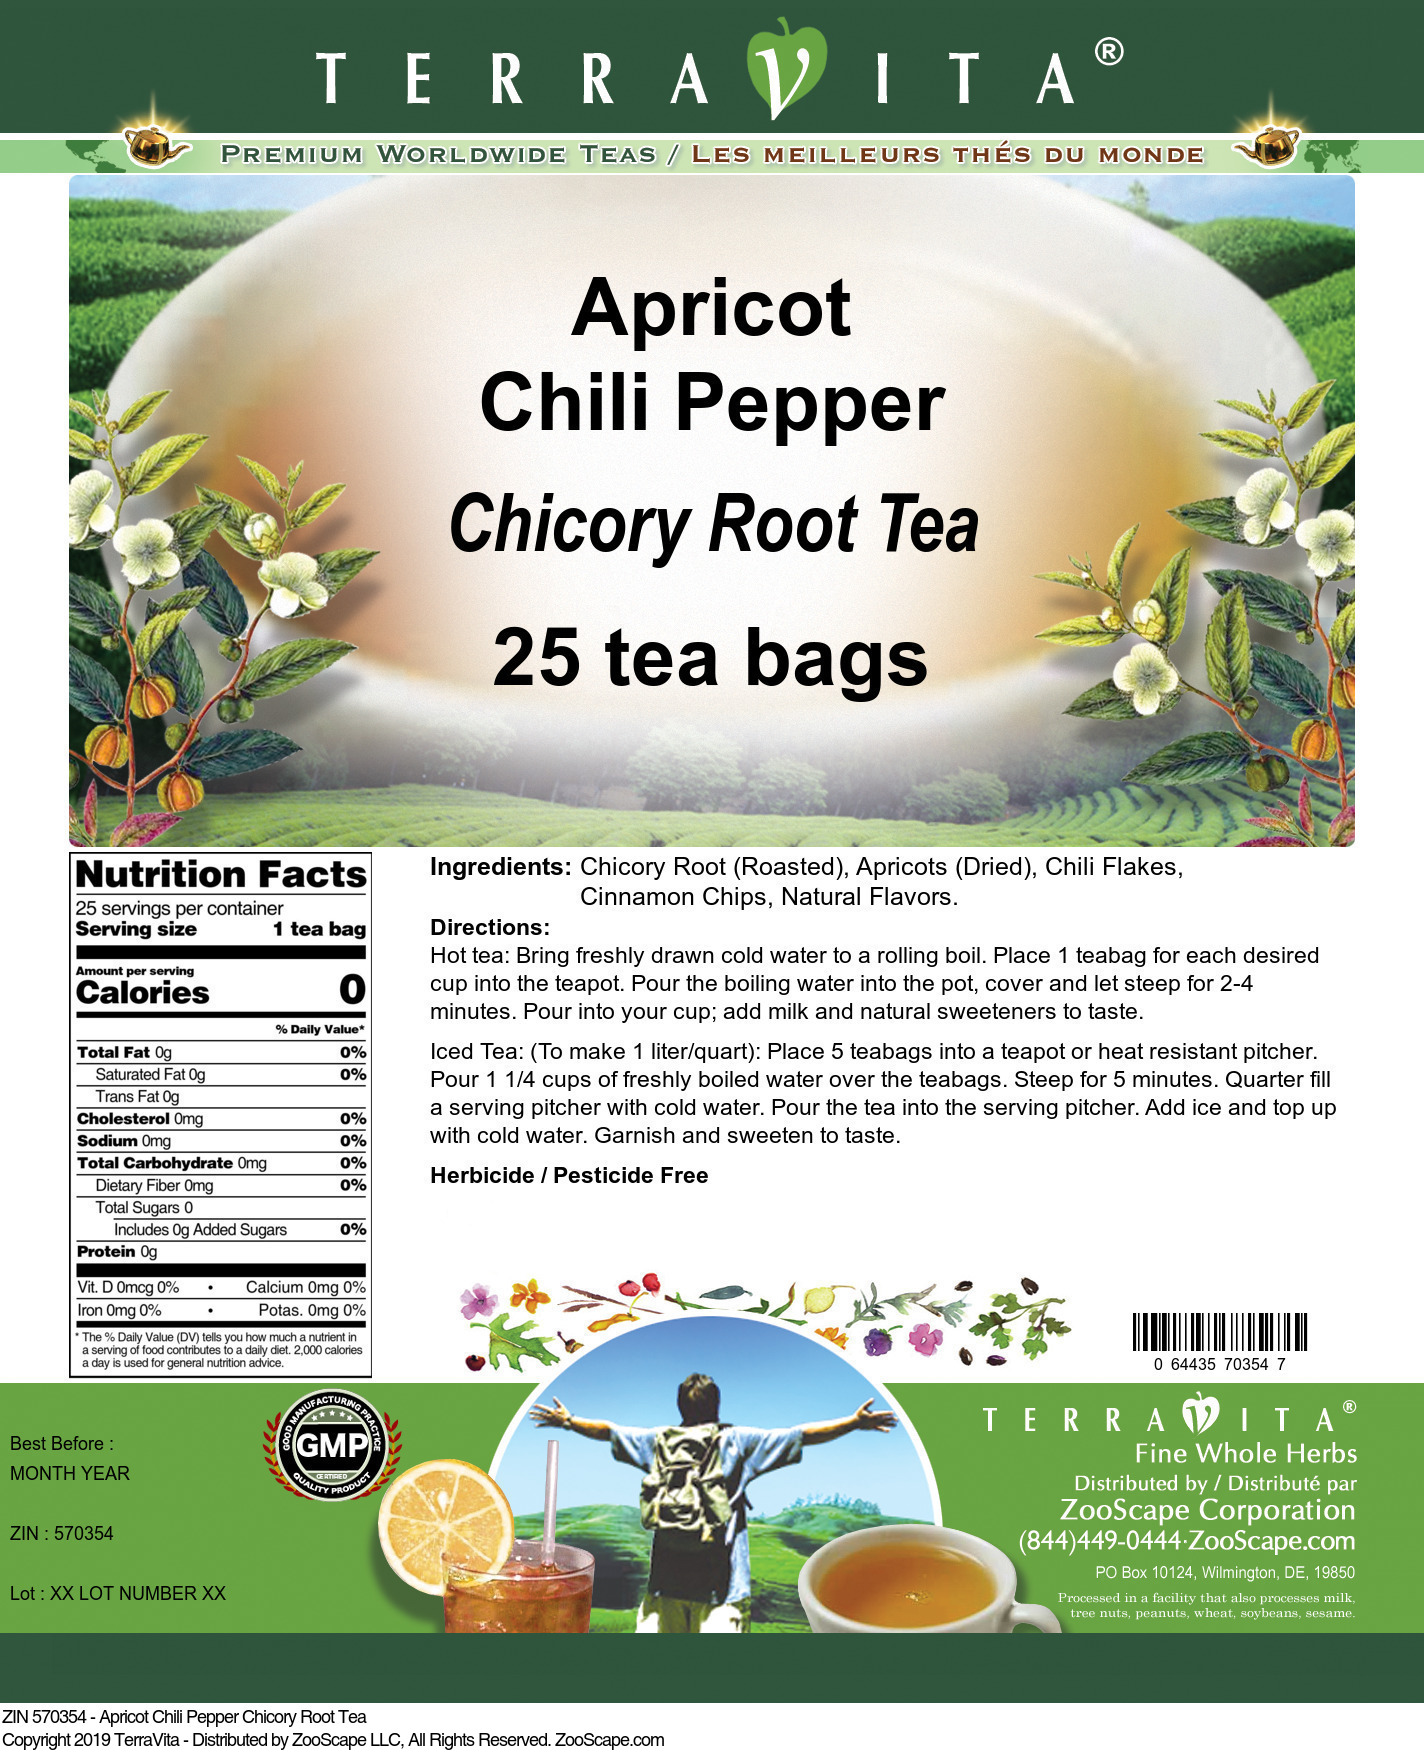 Apricot Chili Pepper Chicory Root Tea - Label